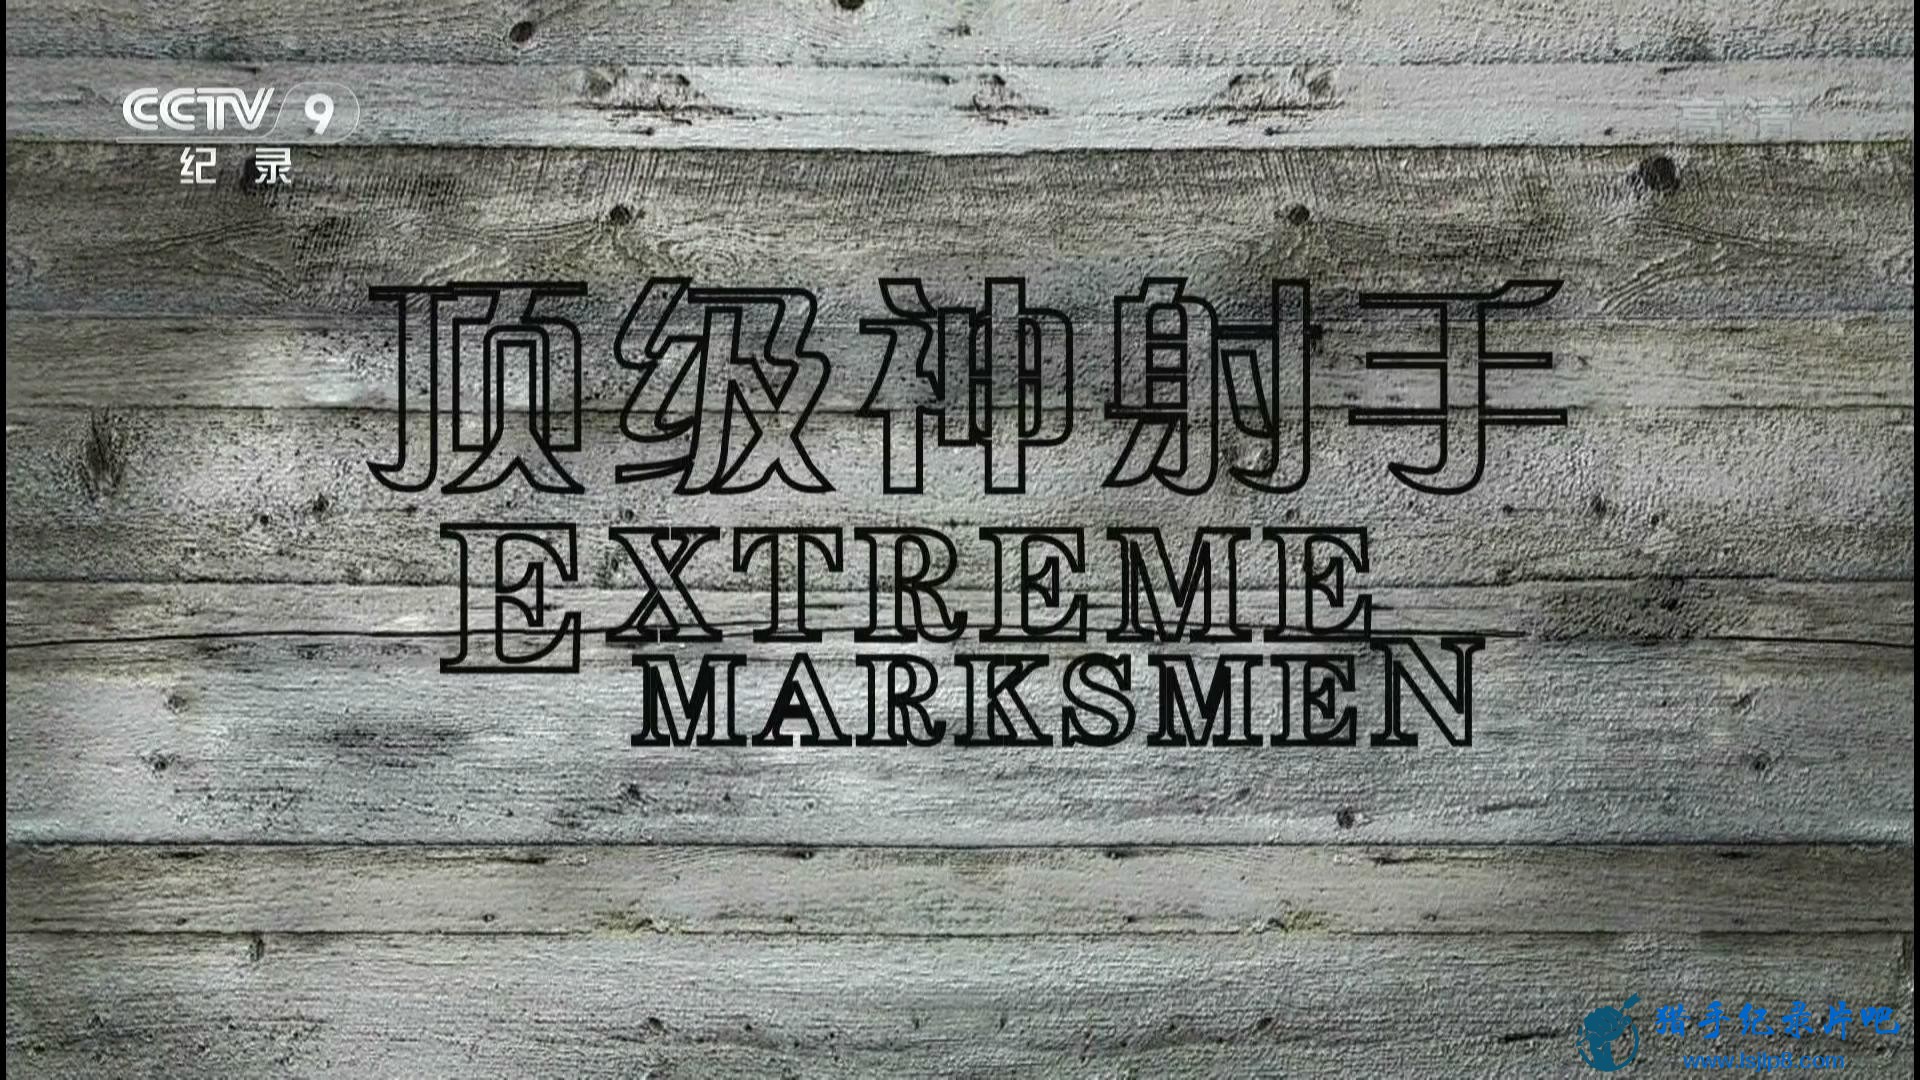 20160808_CCTV-9_Universal.Vision-Extreme.Marksmen.EP01-jlp_20180101205611.JPG